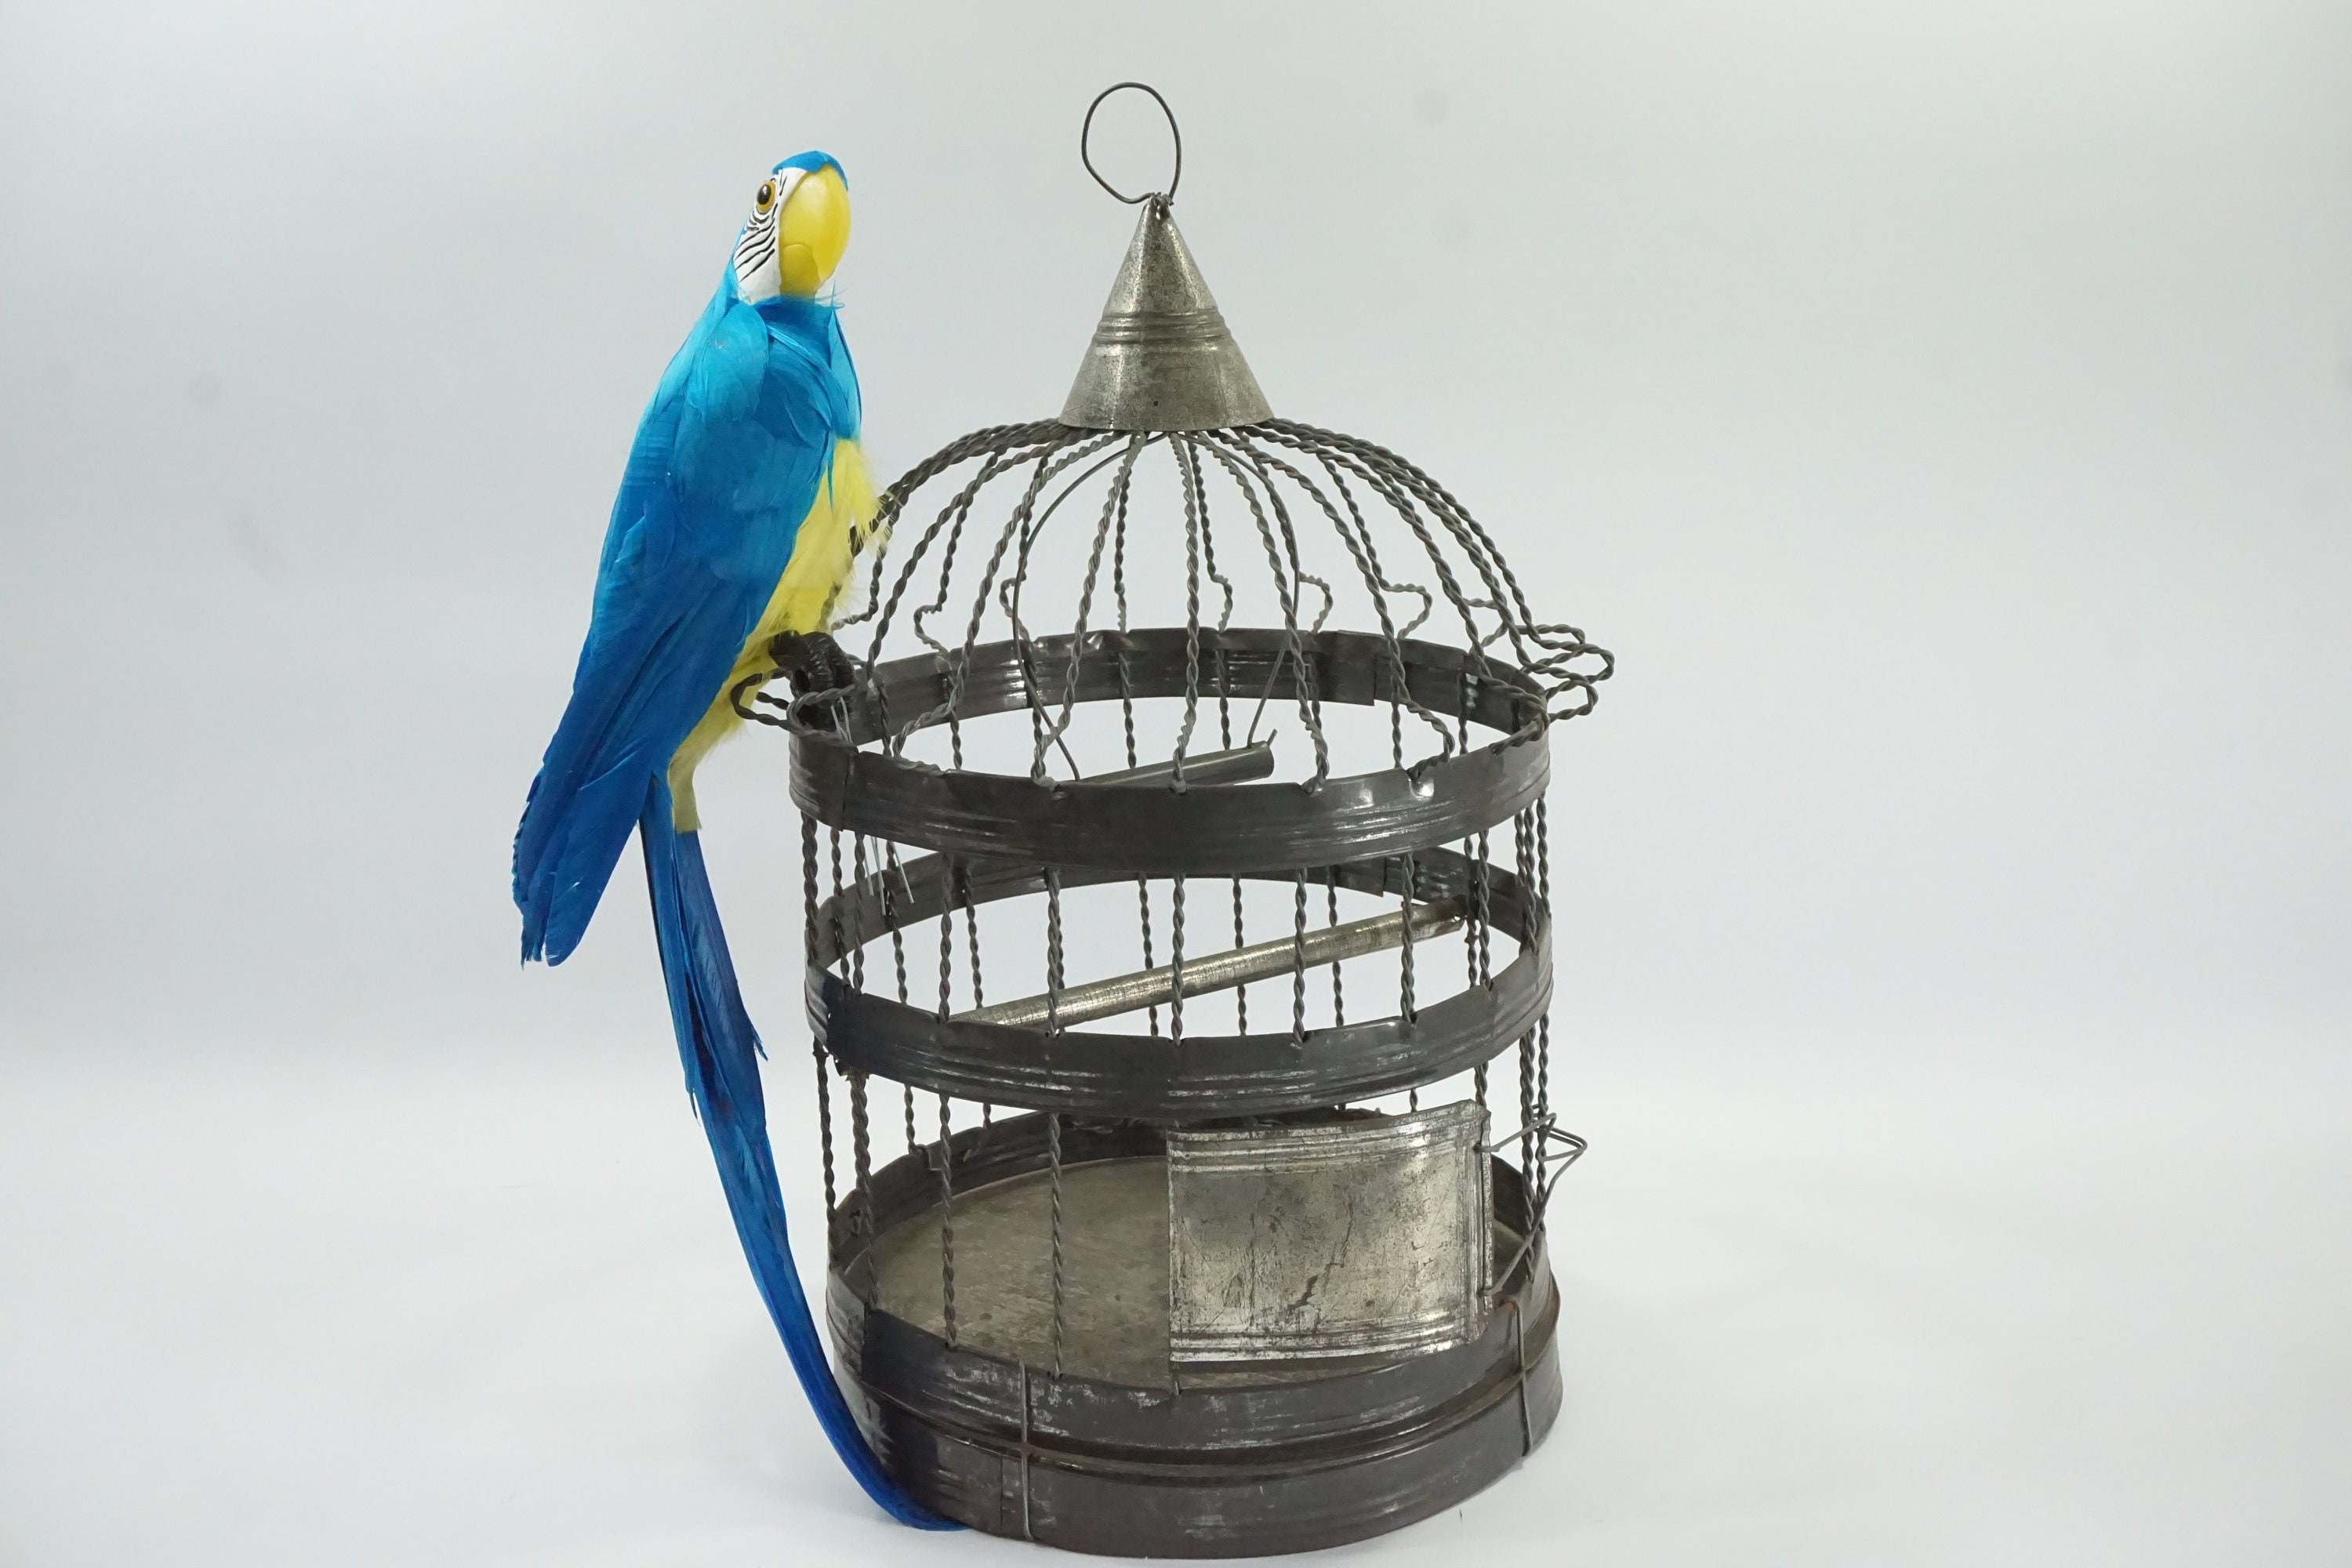 AUEAR, Red Lifelike Artificial Birds Feathered Fake Shoulder Parrot Decor  Model for Decoration Craft Decorative 17 Inch Shoulder Prop